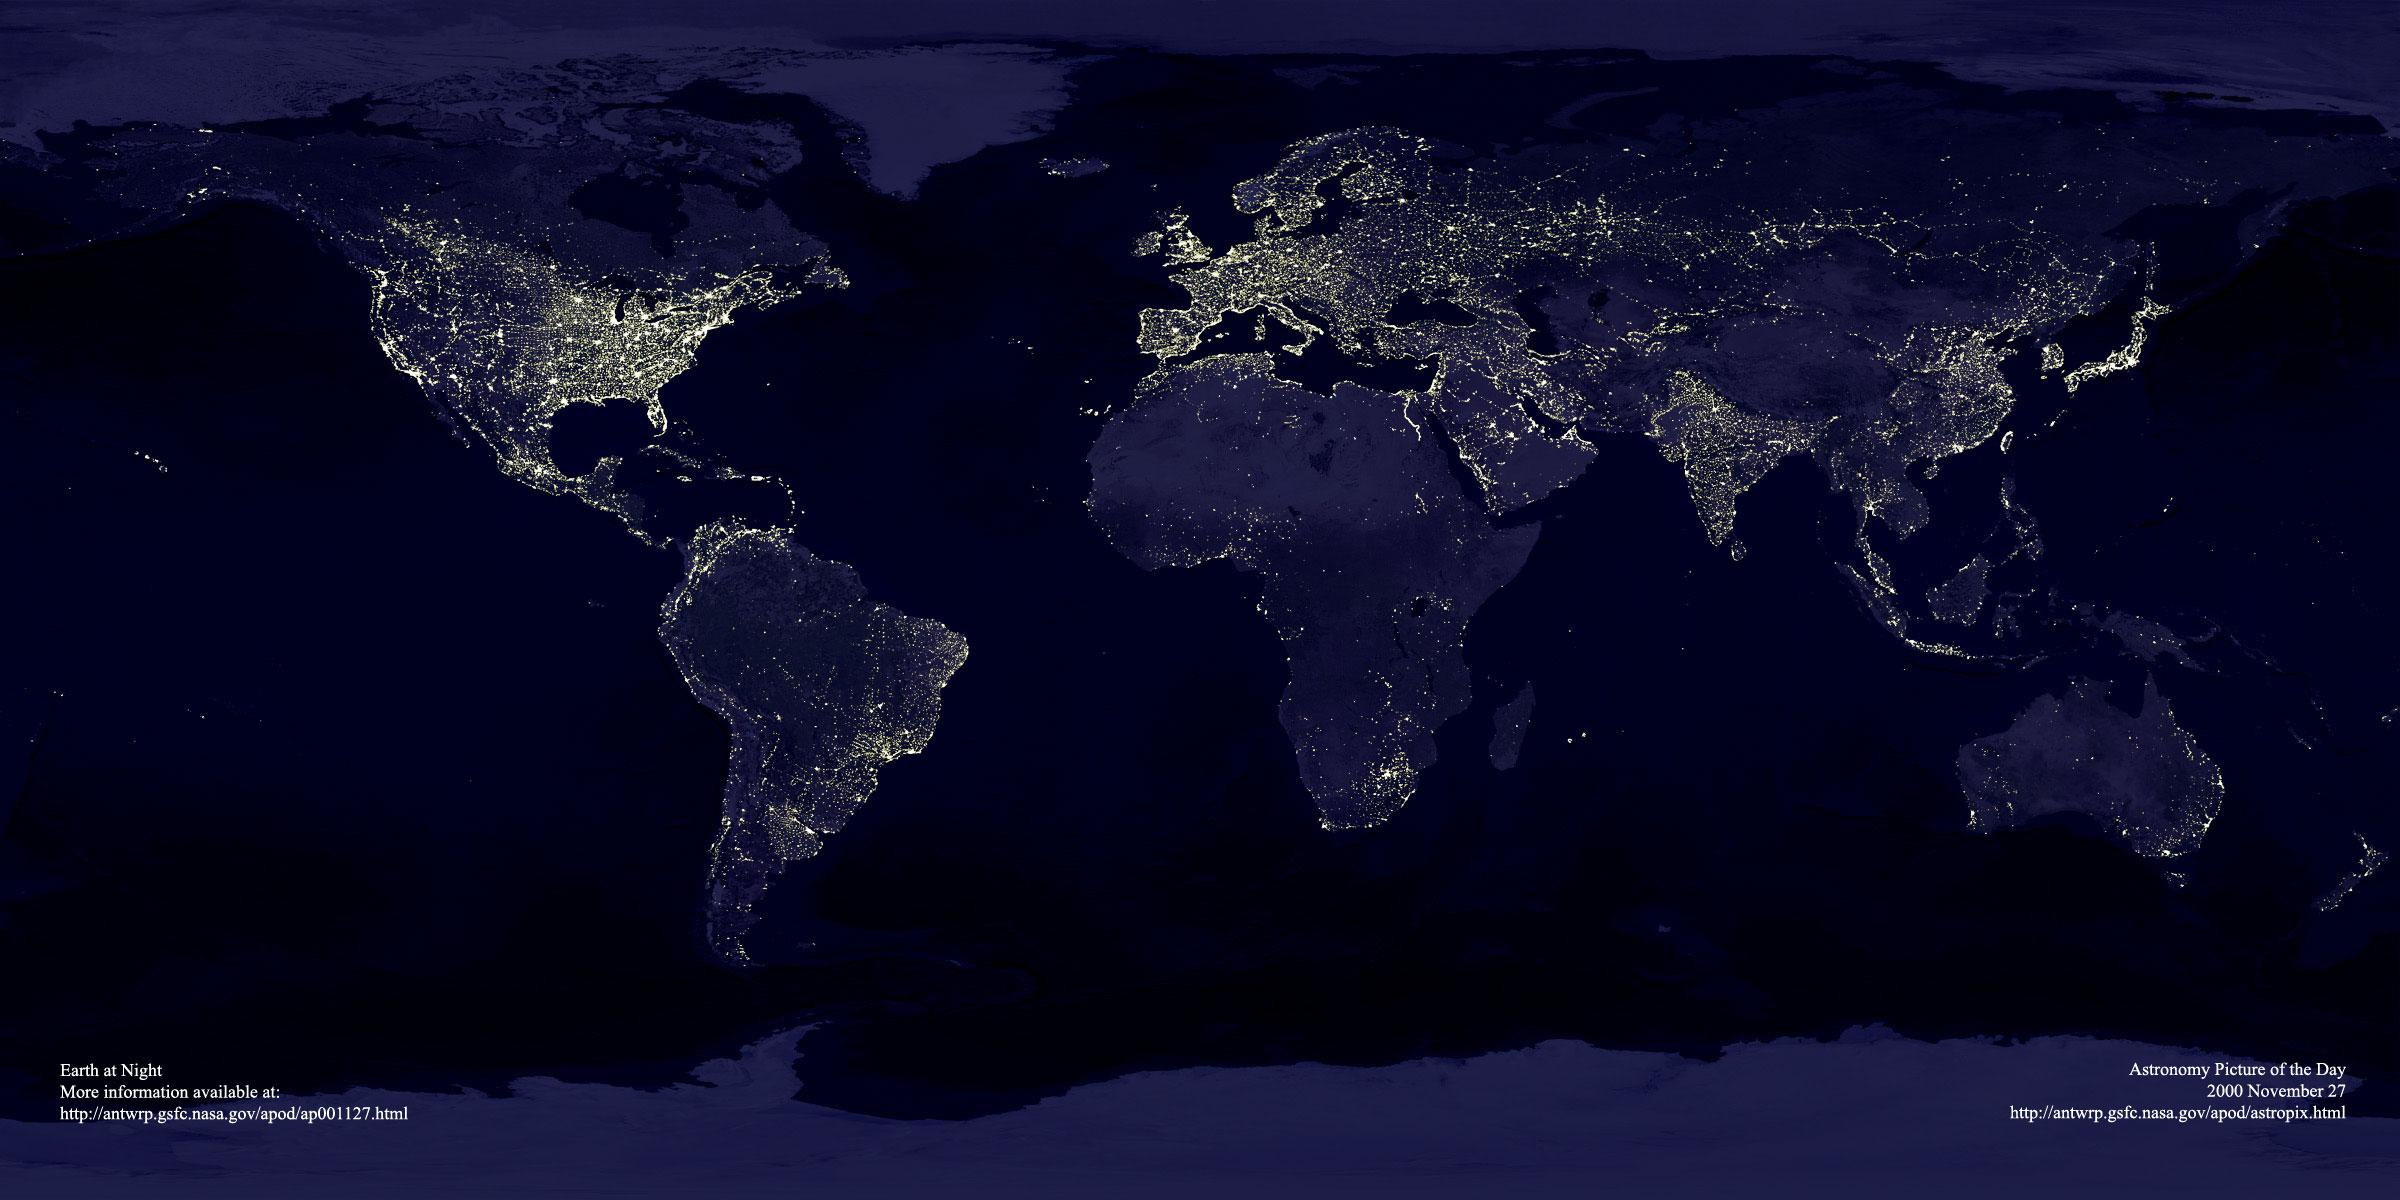 Populationdata.net statistiques cartes mondiales